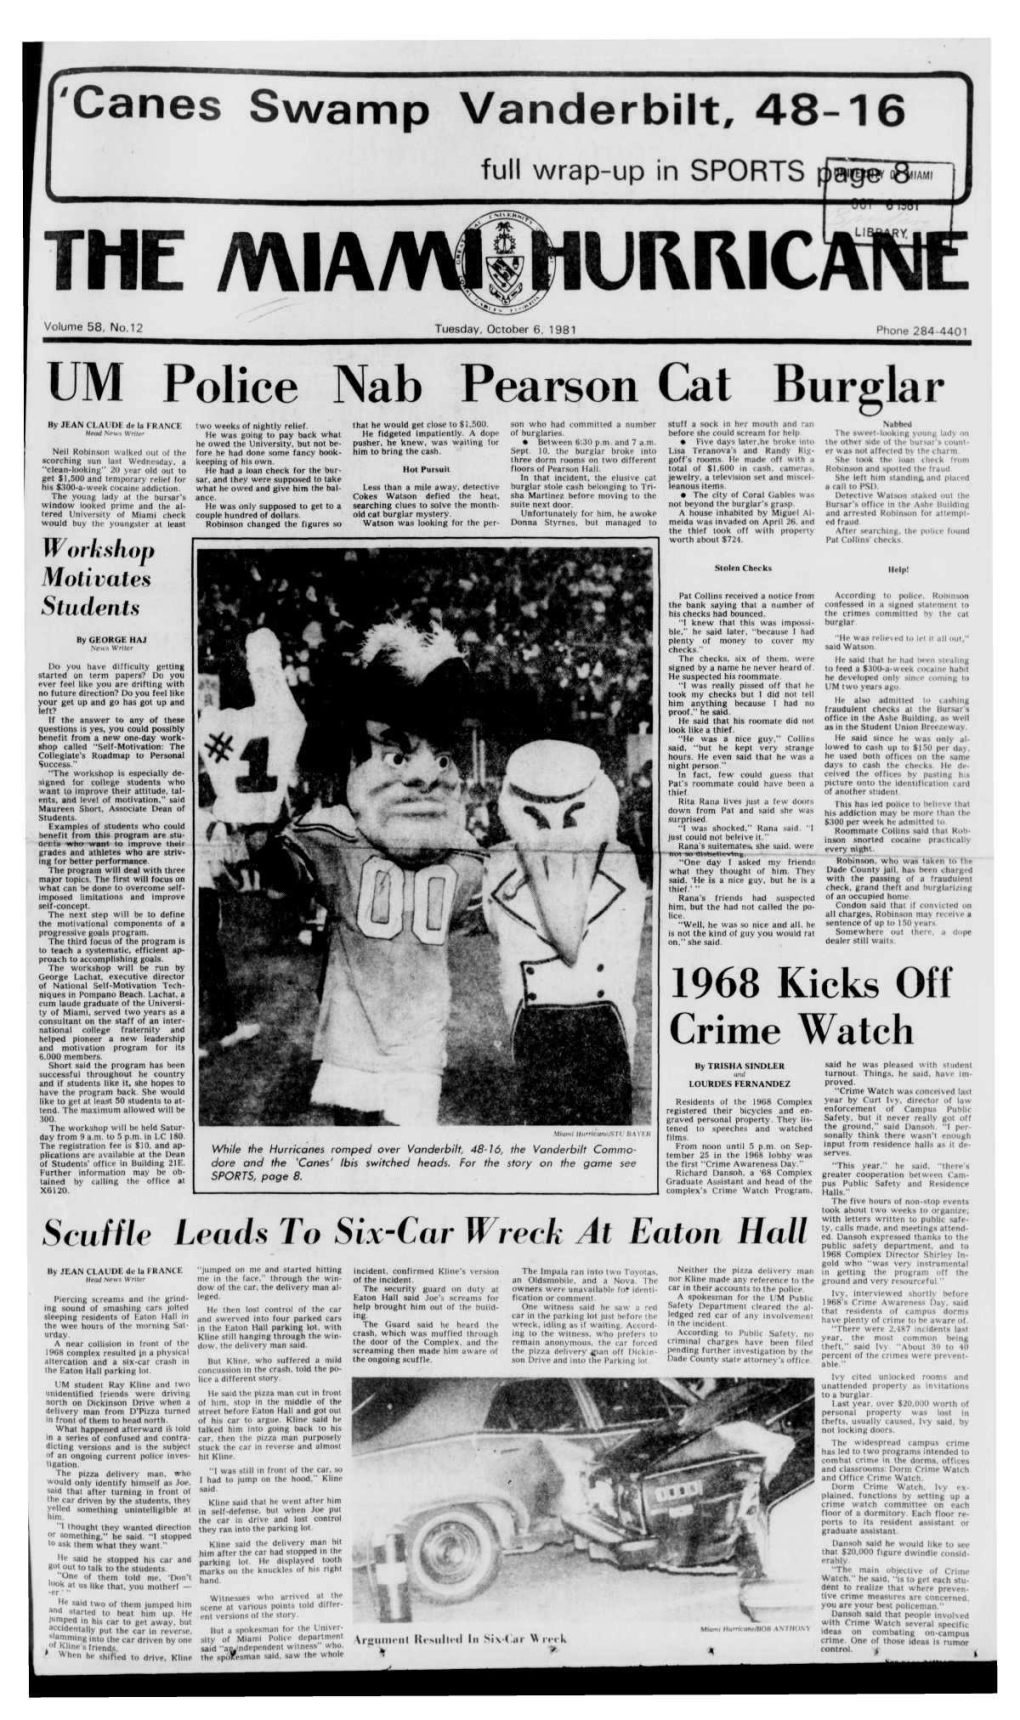 UM Police Nab Pearson Cat Burglar